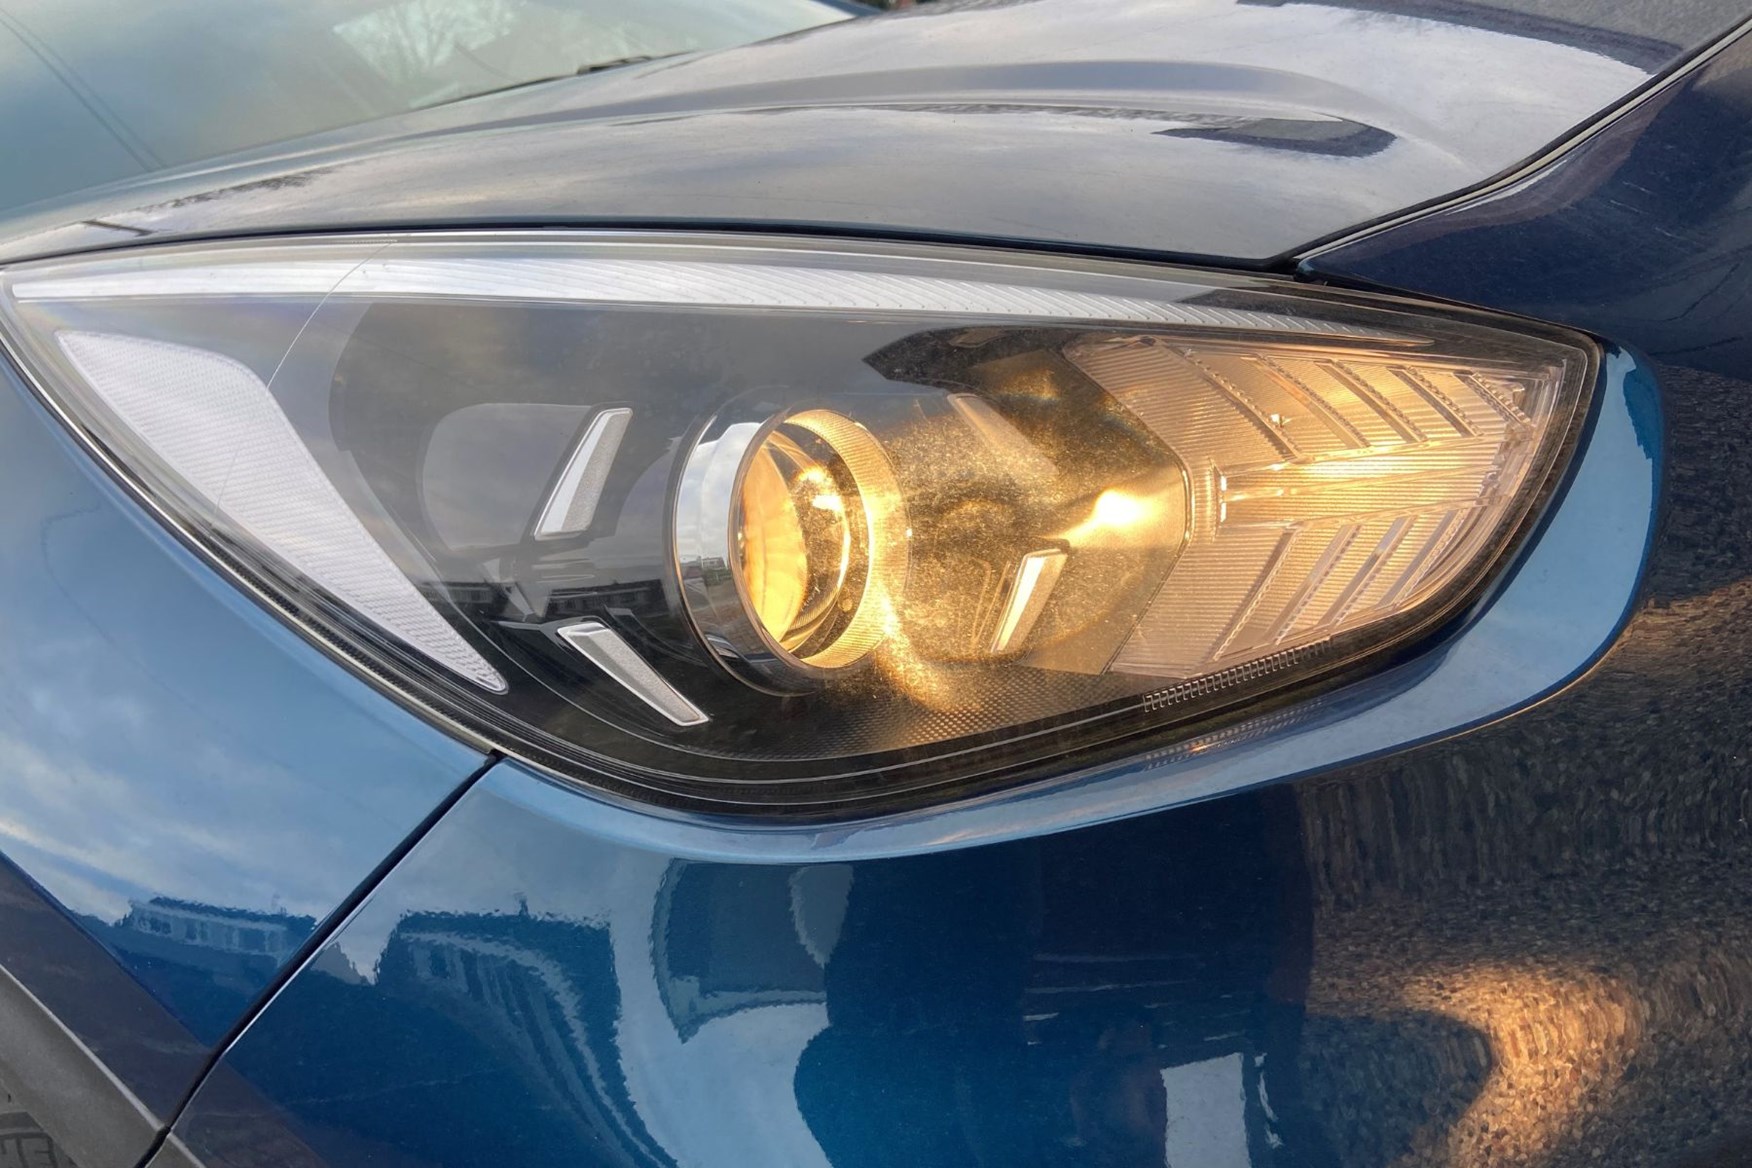 Osram Night Breaker 200 H4 Car Headlight Bulb +200% Upgrade Headlamp X 1  Single